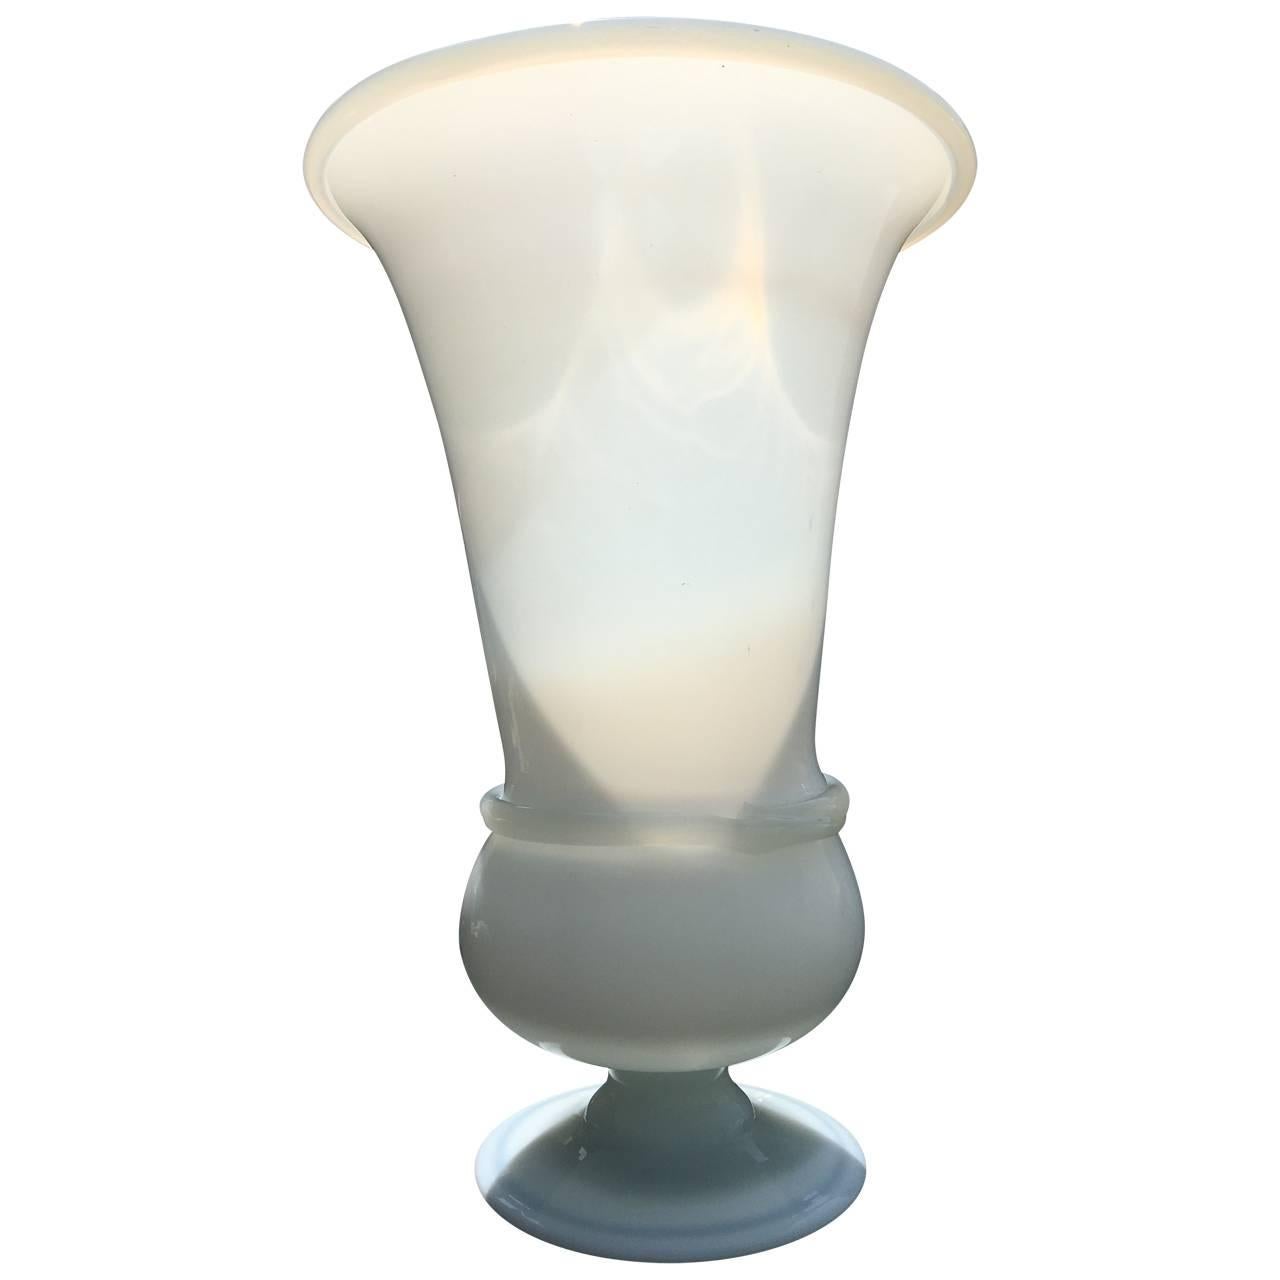 Large ivory colored trumpet-shaped opaline vase.